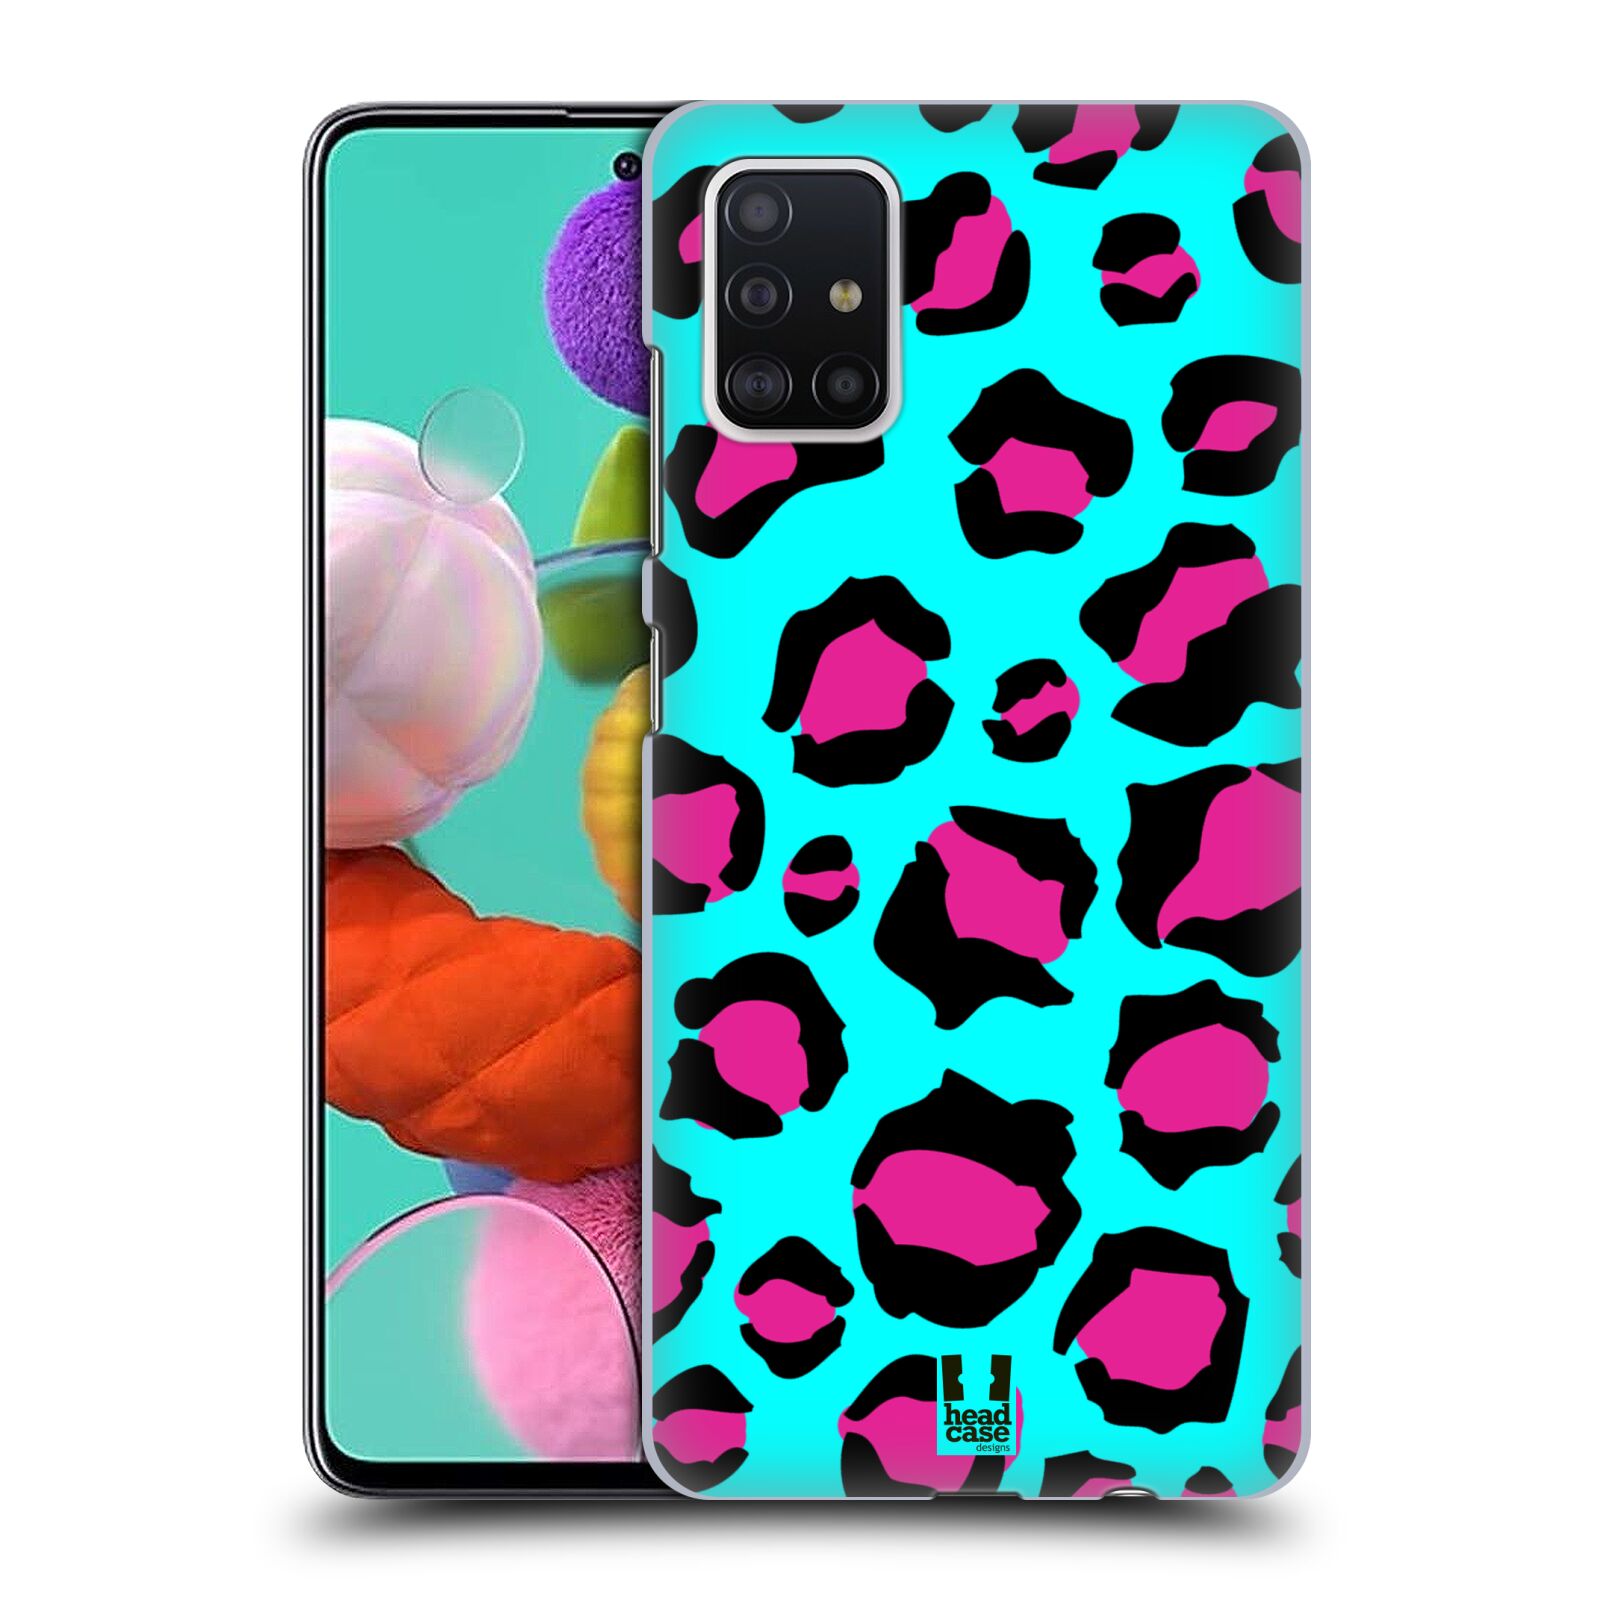 Pouzdro na mobil Samsung Galaxy A51 - HEAD CASE - vzor Divočina zvíře tyrkysový leopard